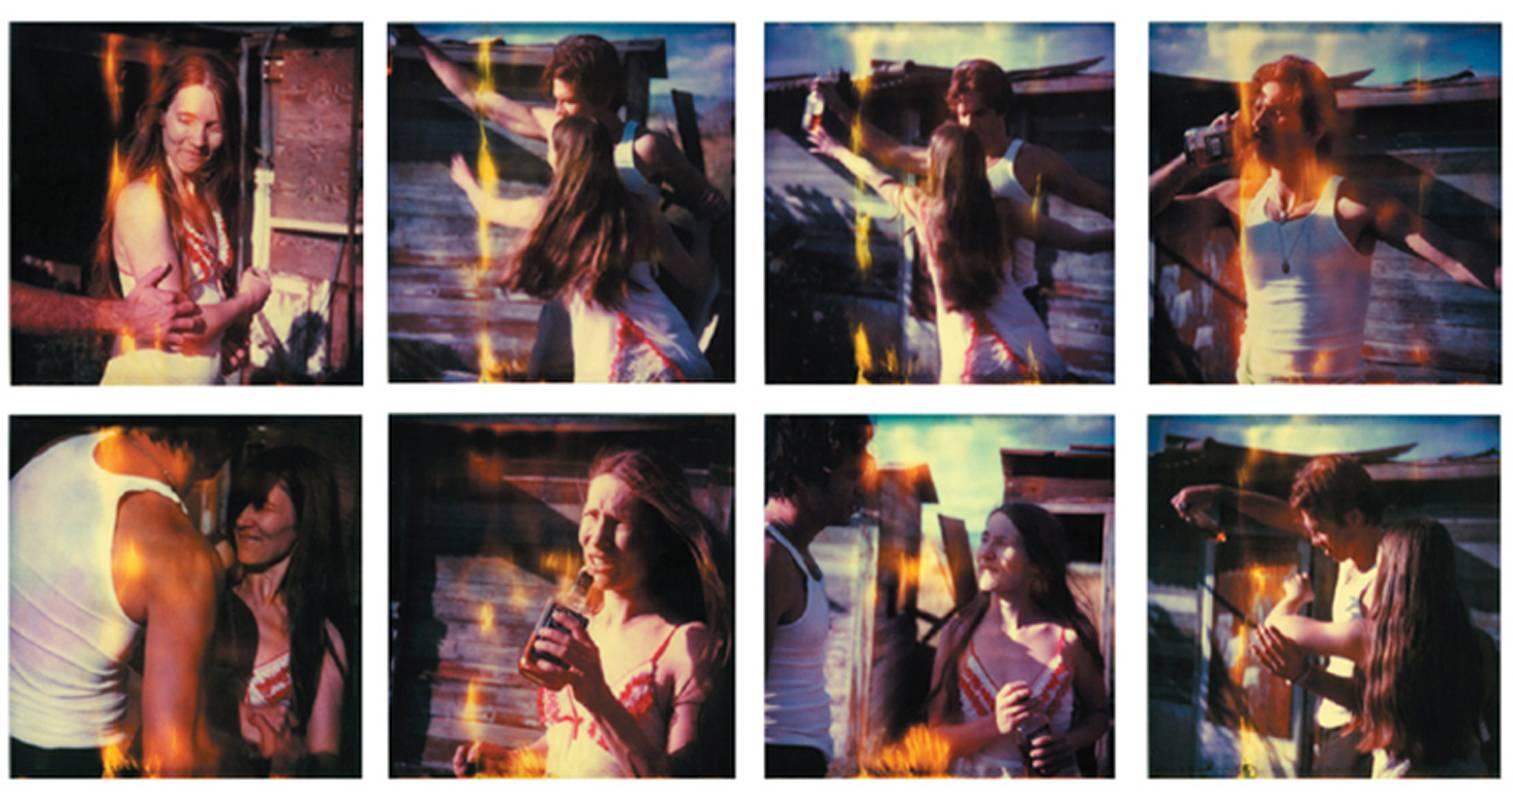 Stefanie Schneider Color Photograph - Whisky Dance I - Sidewinder - 8 pieces, analog, 82x80cm each, mounted